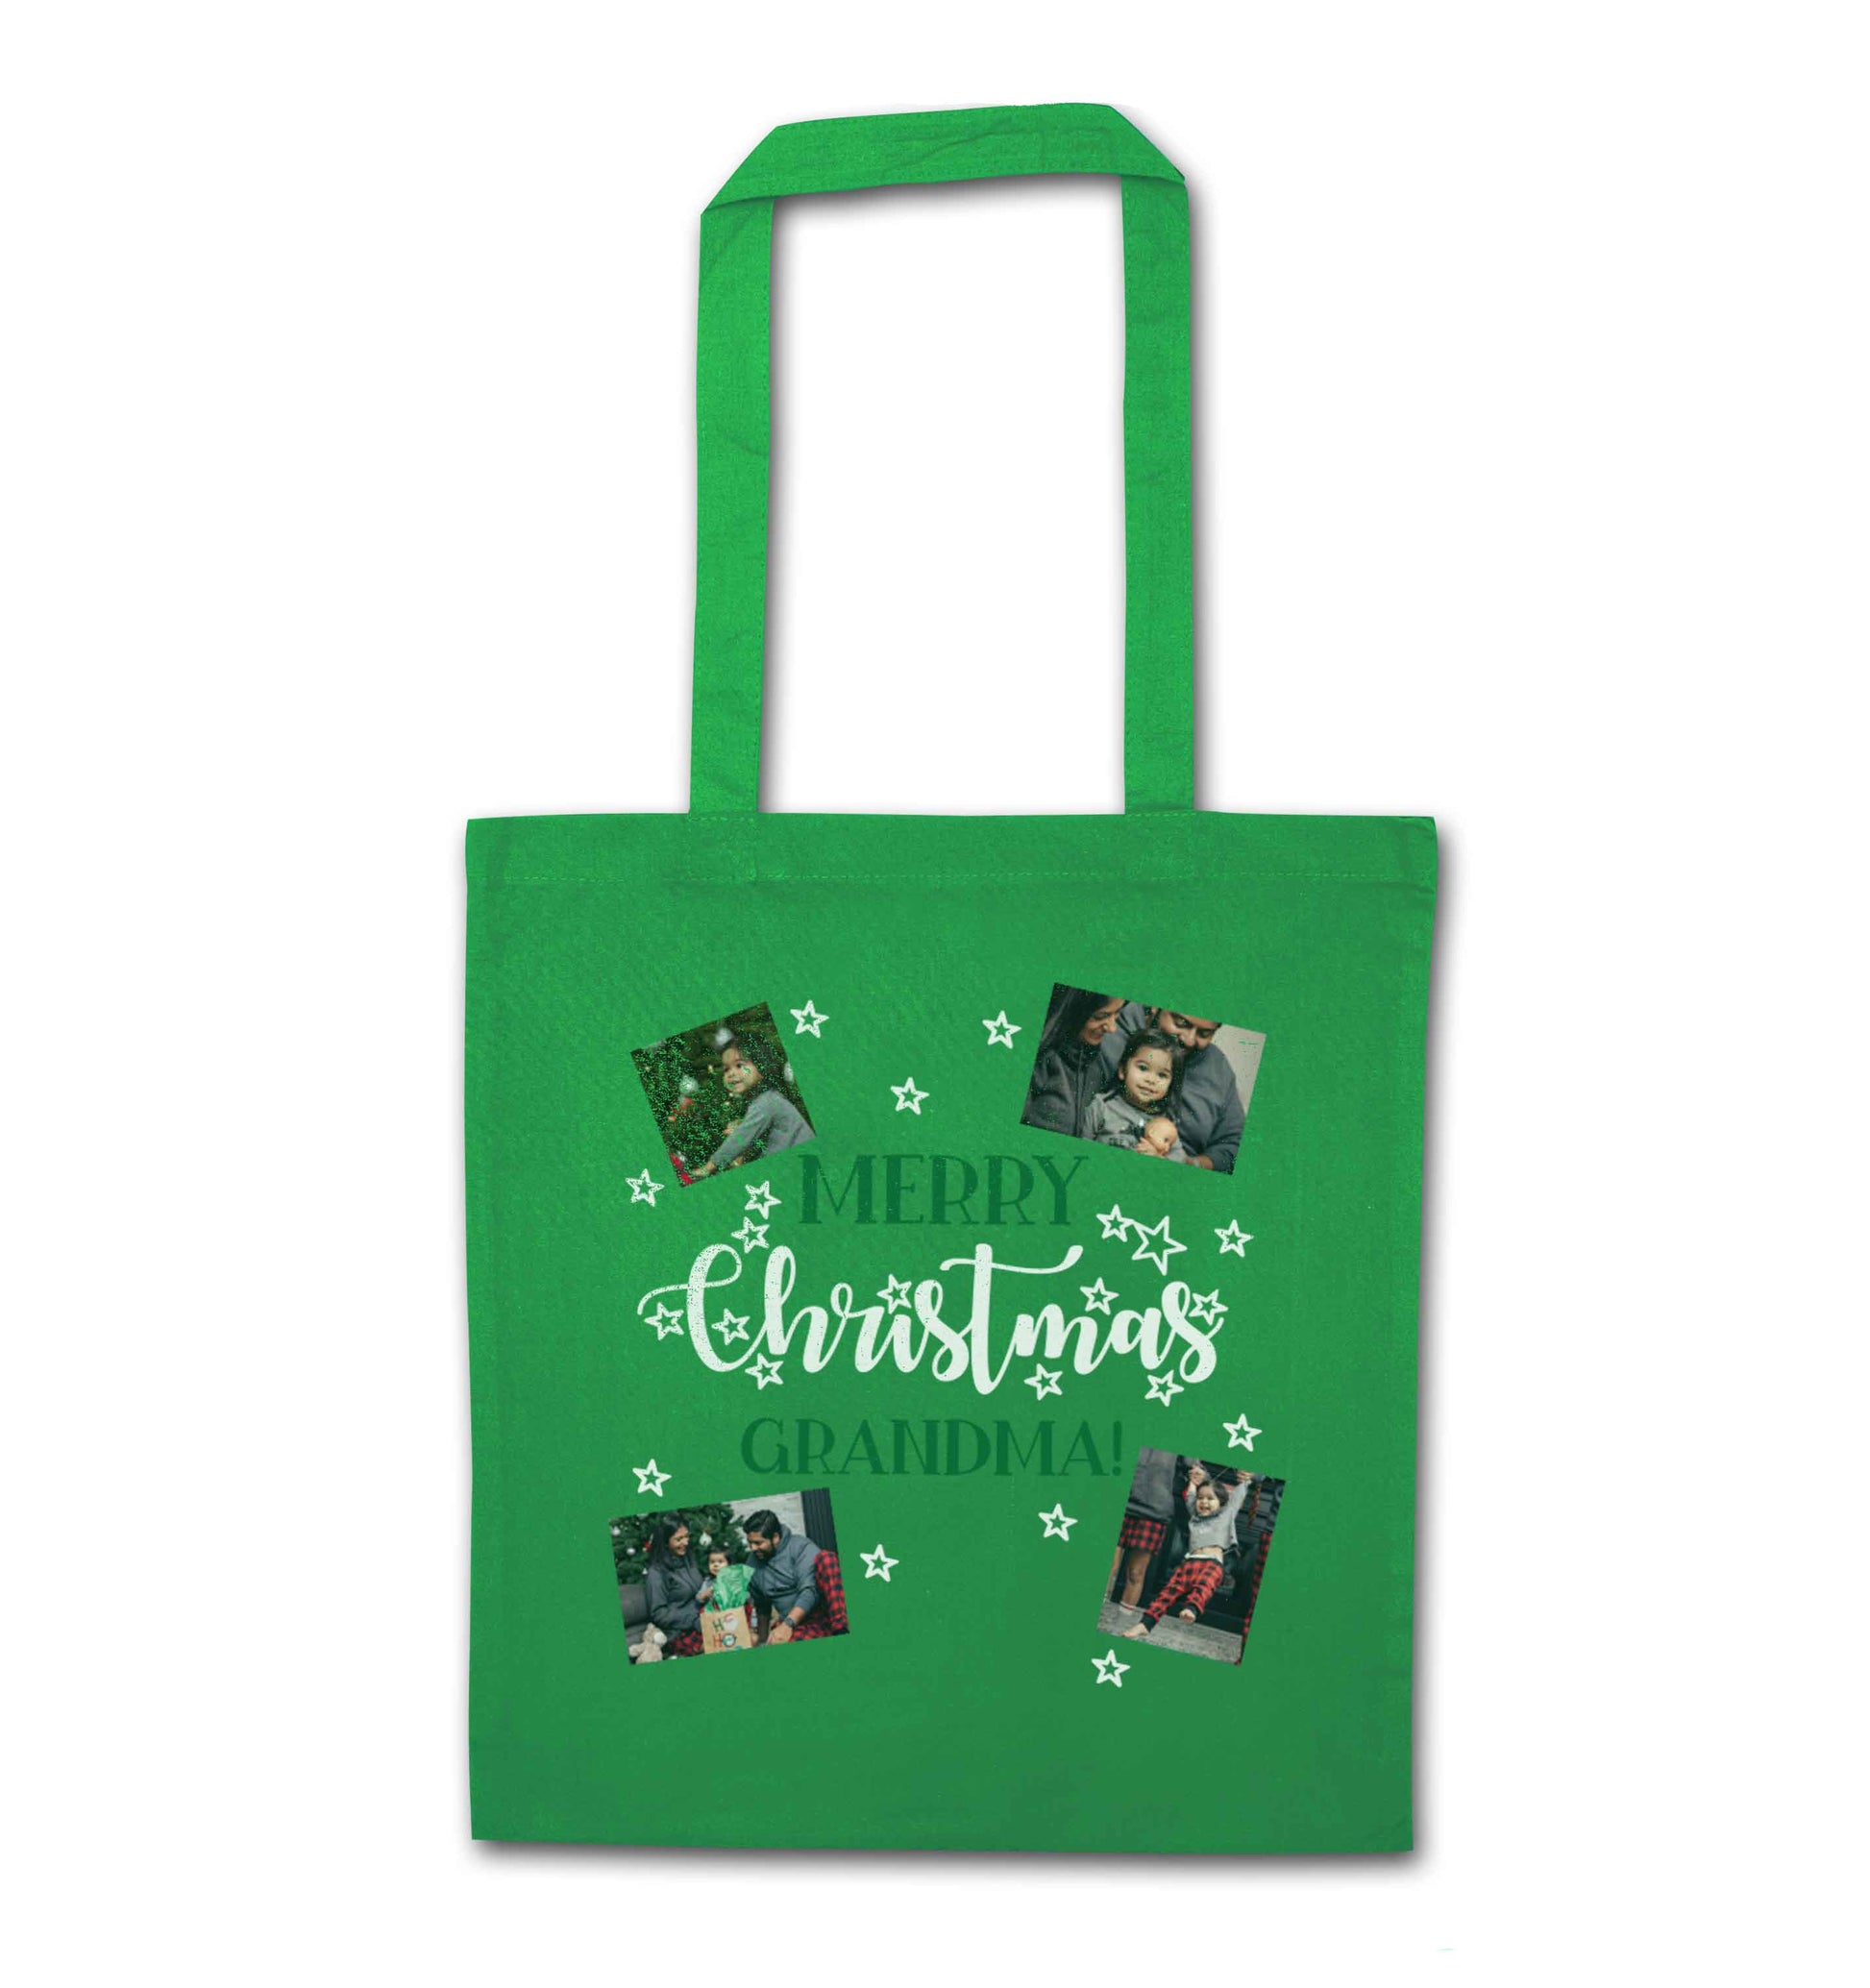 Merry Christmas grandma green tote bag